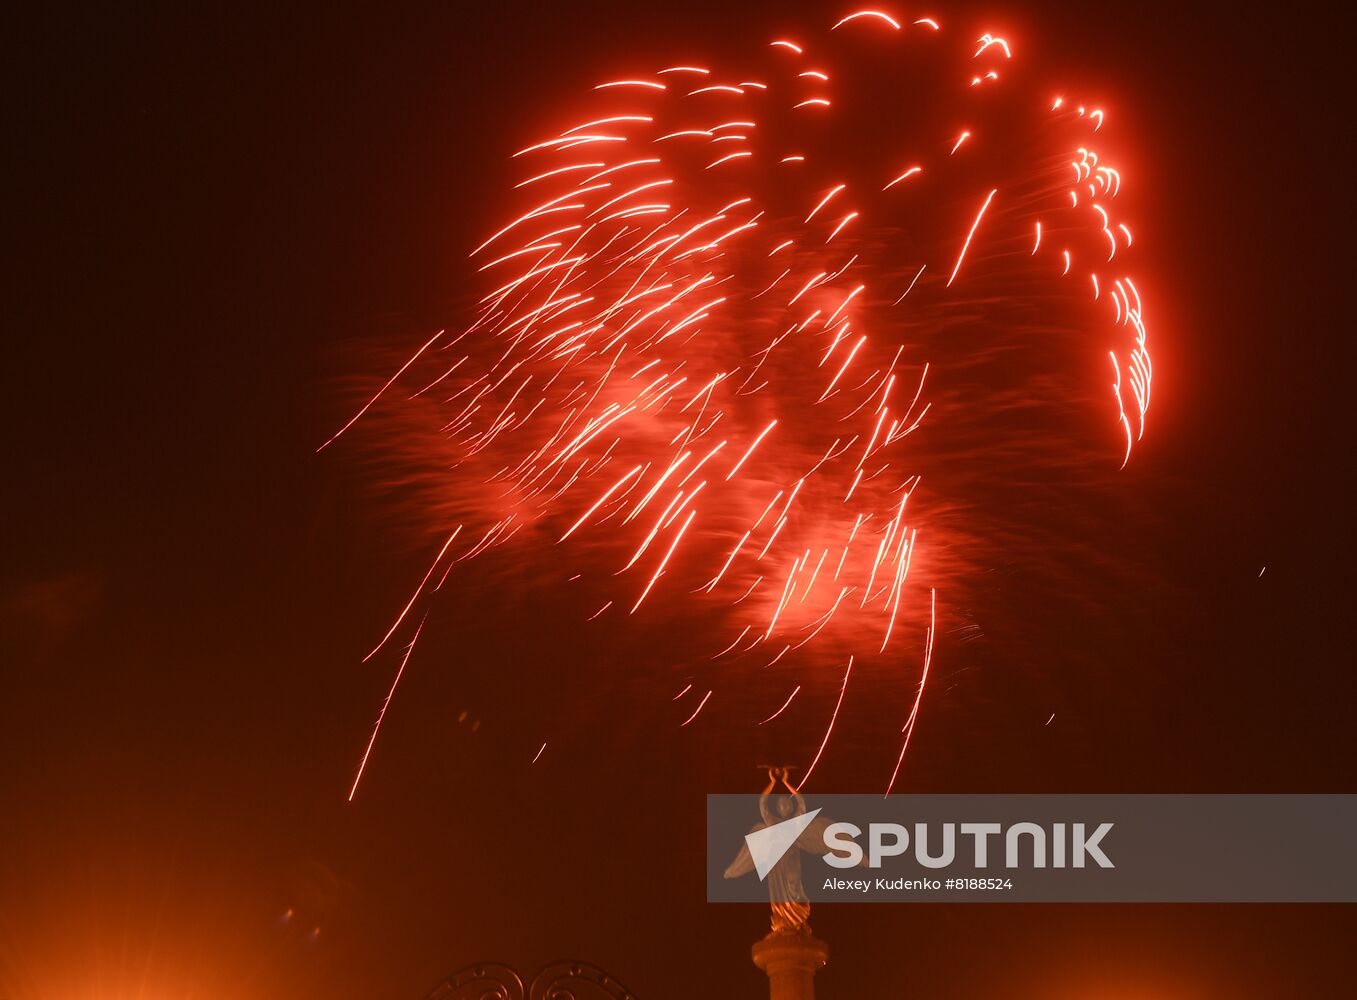 DPR LPR WWII Victory Day Fireworks